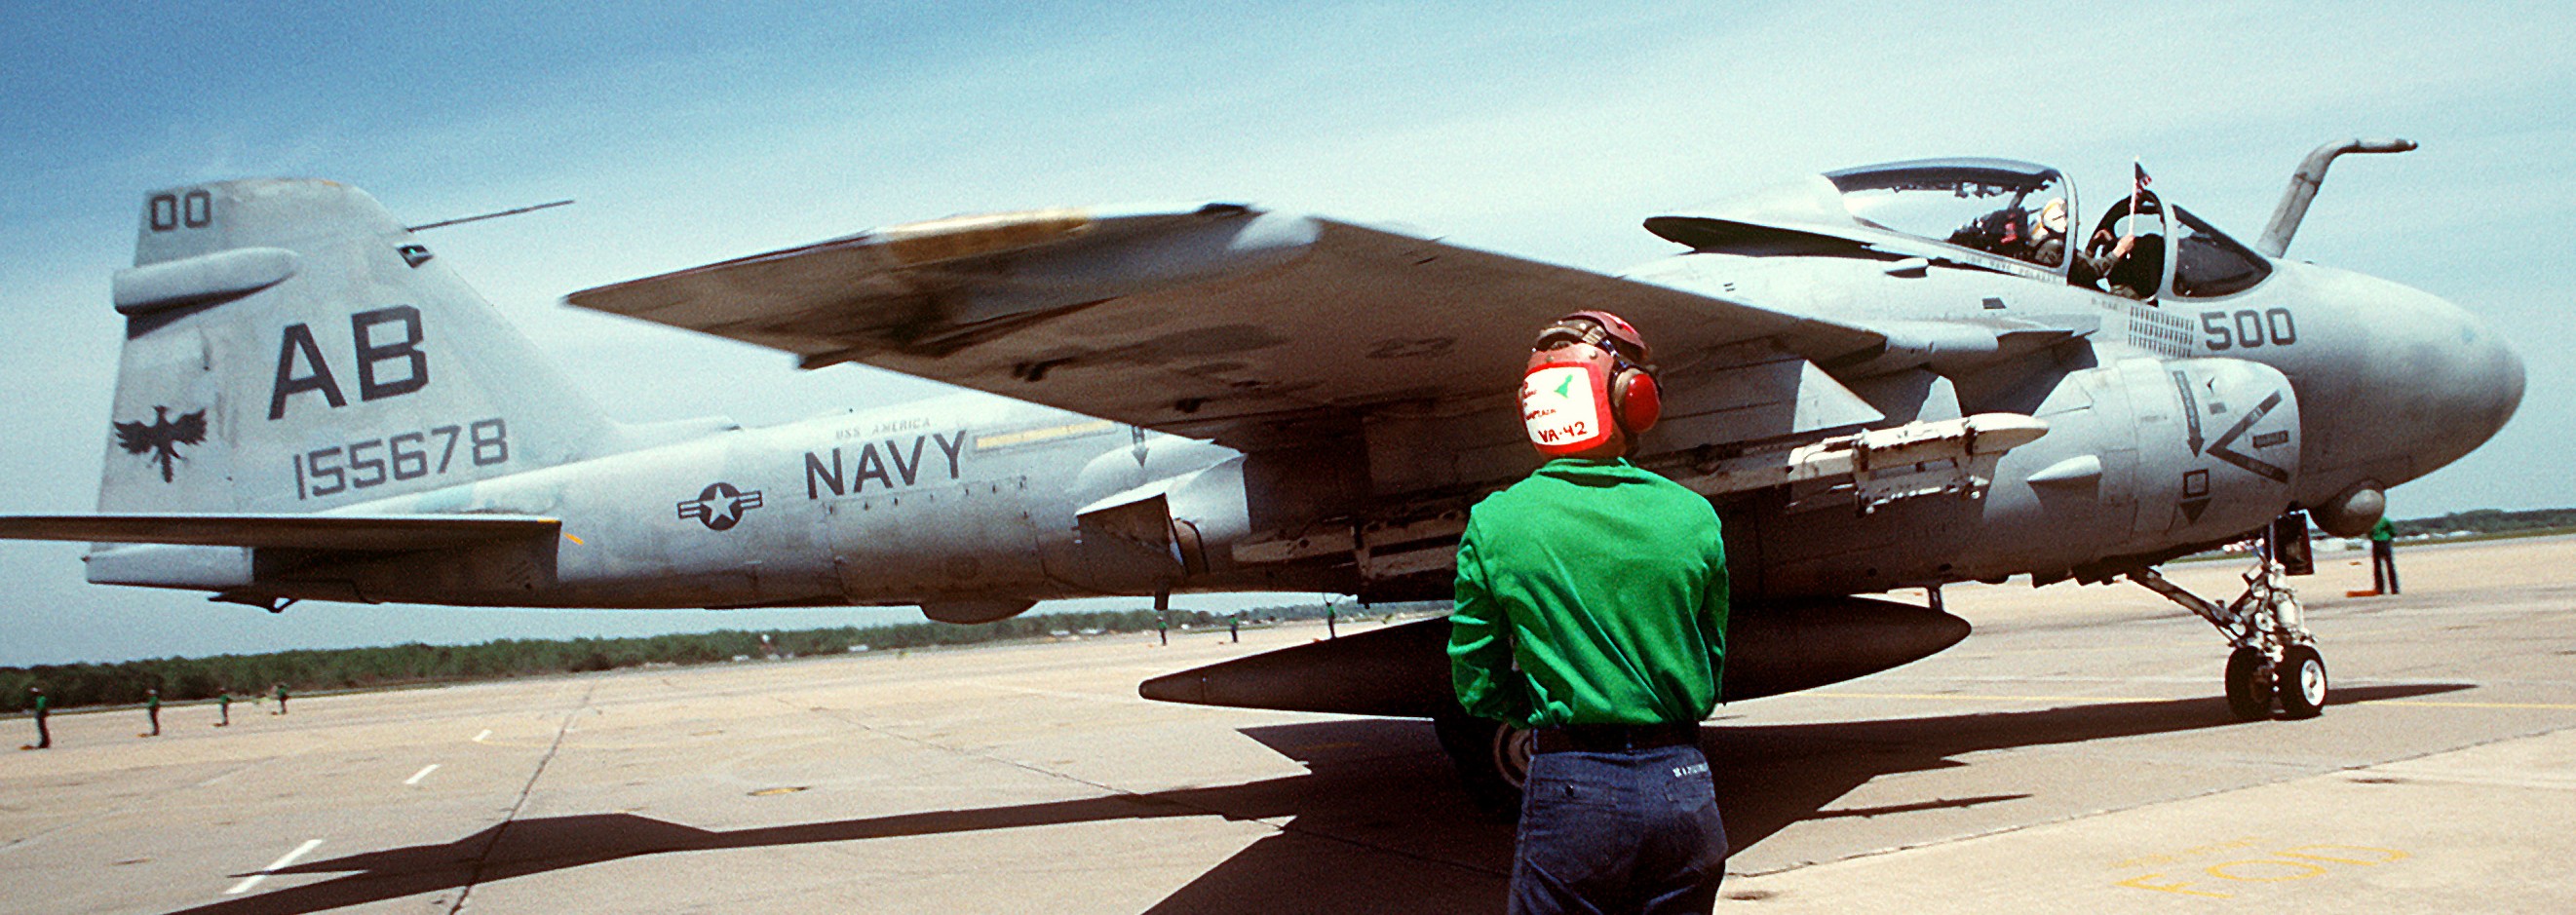 va-85 black falcons attack squadron us navy a-6e intruder carrier air wing cvw-1 uss america cv-66 26 nas oceana operation desert storm shield 1991